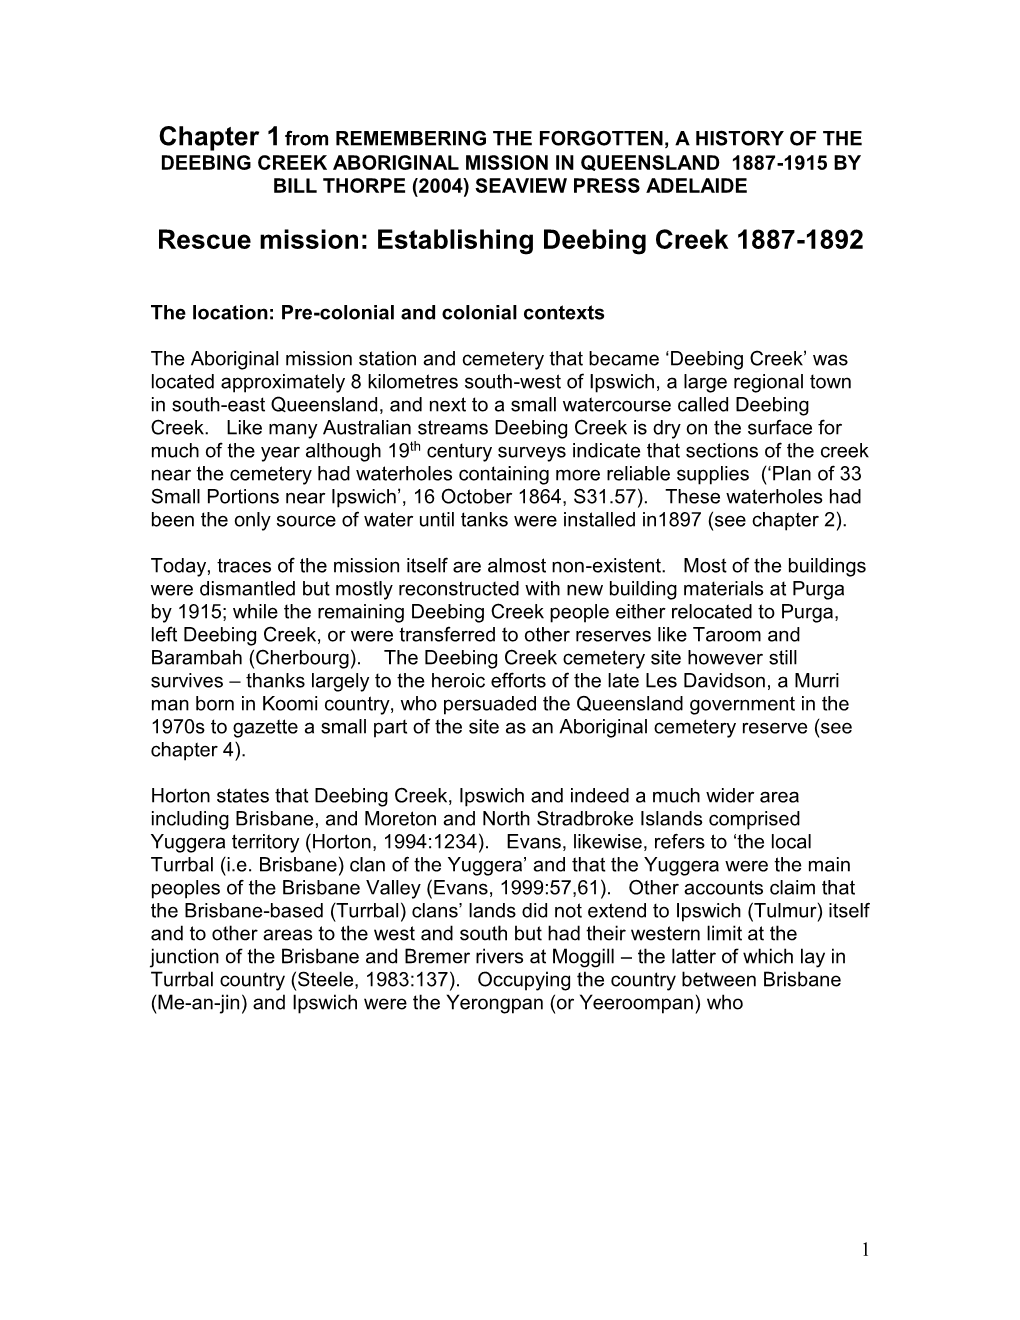 Rescue Mission: Establishing Deebing Creek 1887-1892